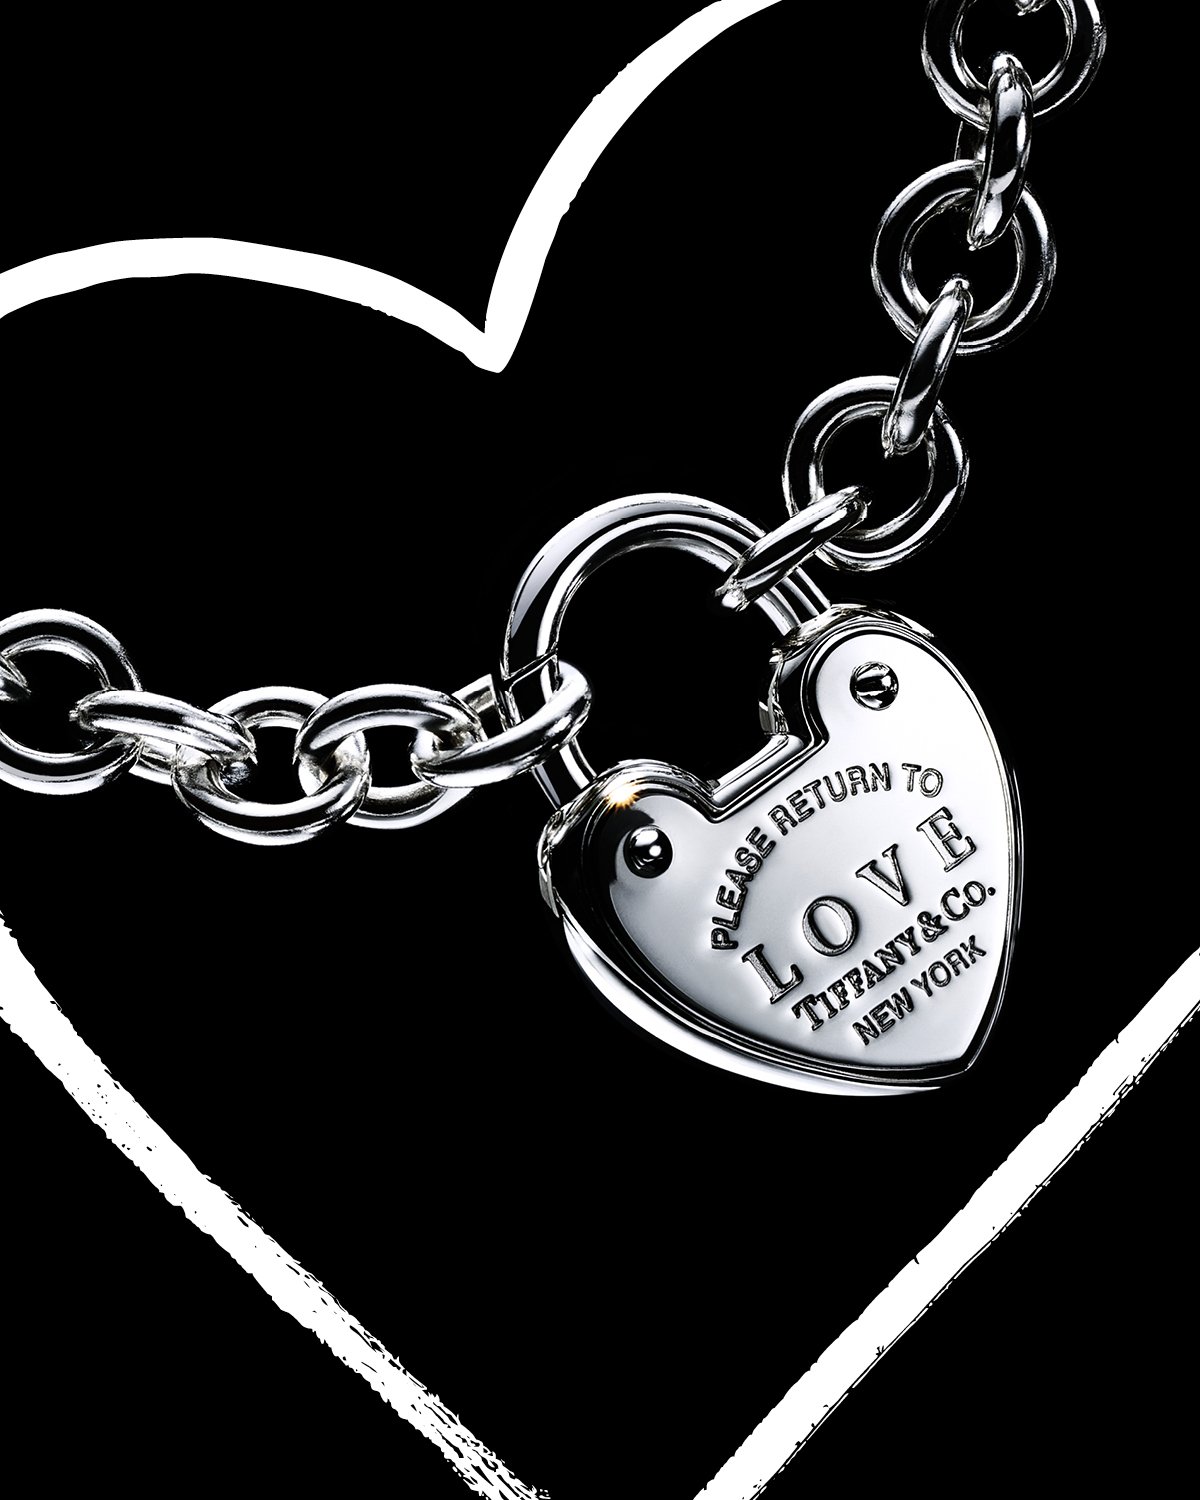 tiffany and co heart lock necklace